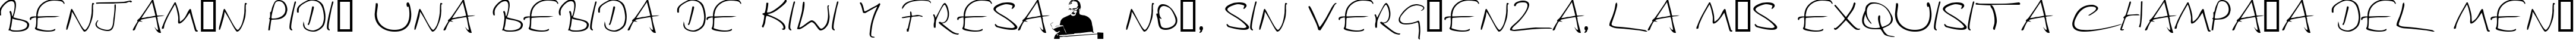 Пример написания шрифтом Douglas Adams Hand текста на испанском